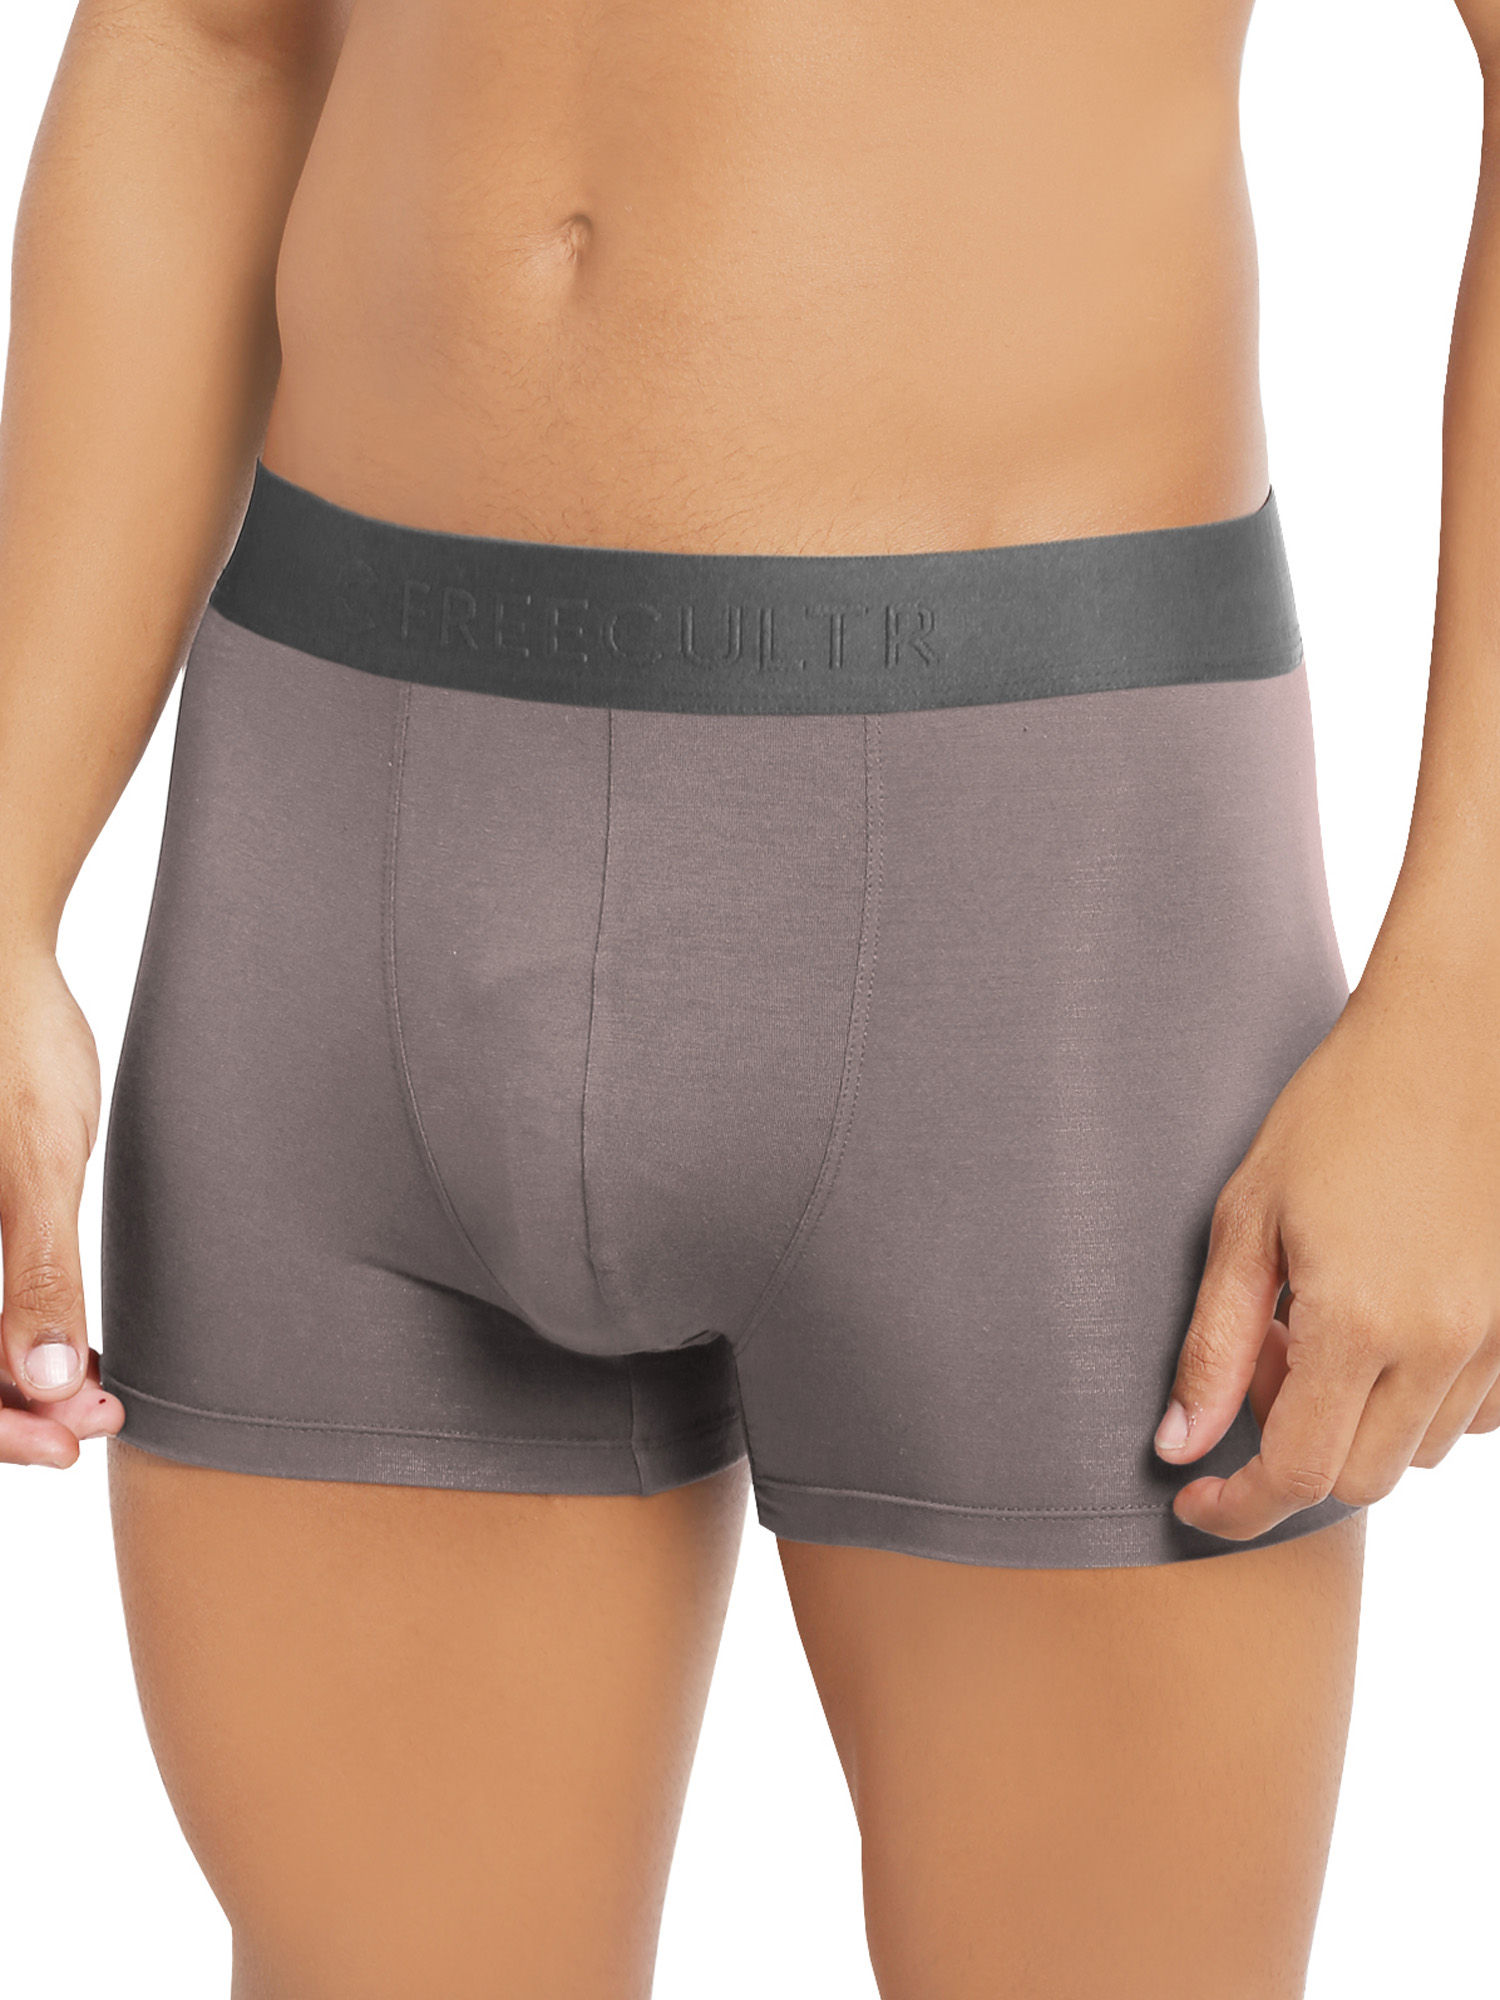 FREECULTR Anti-Microbial Air-Soft Micromodal Underwear Trunk Pack Of 1 - Grey (XL)